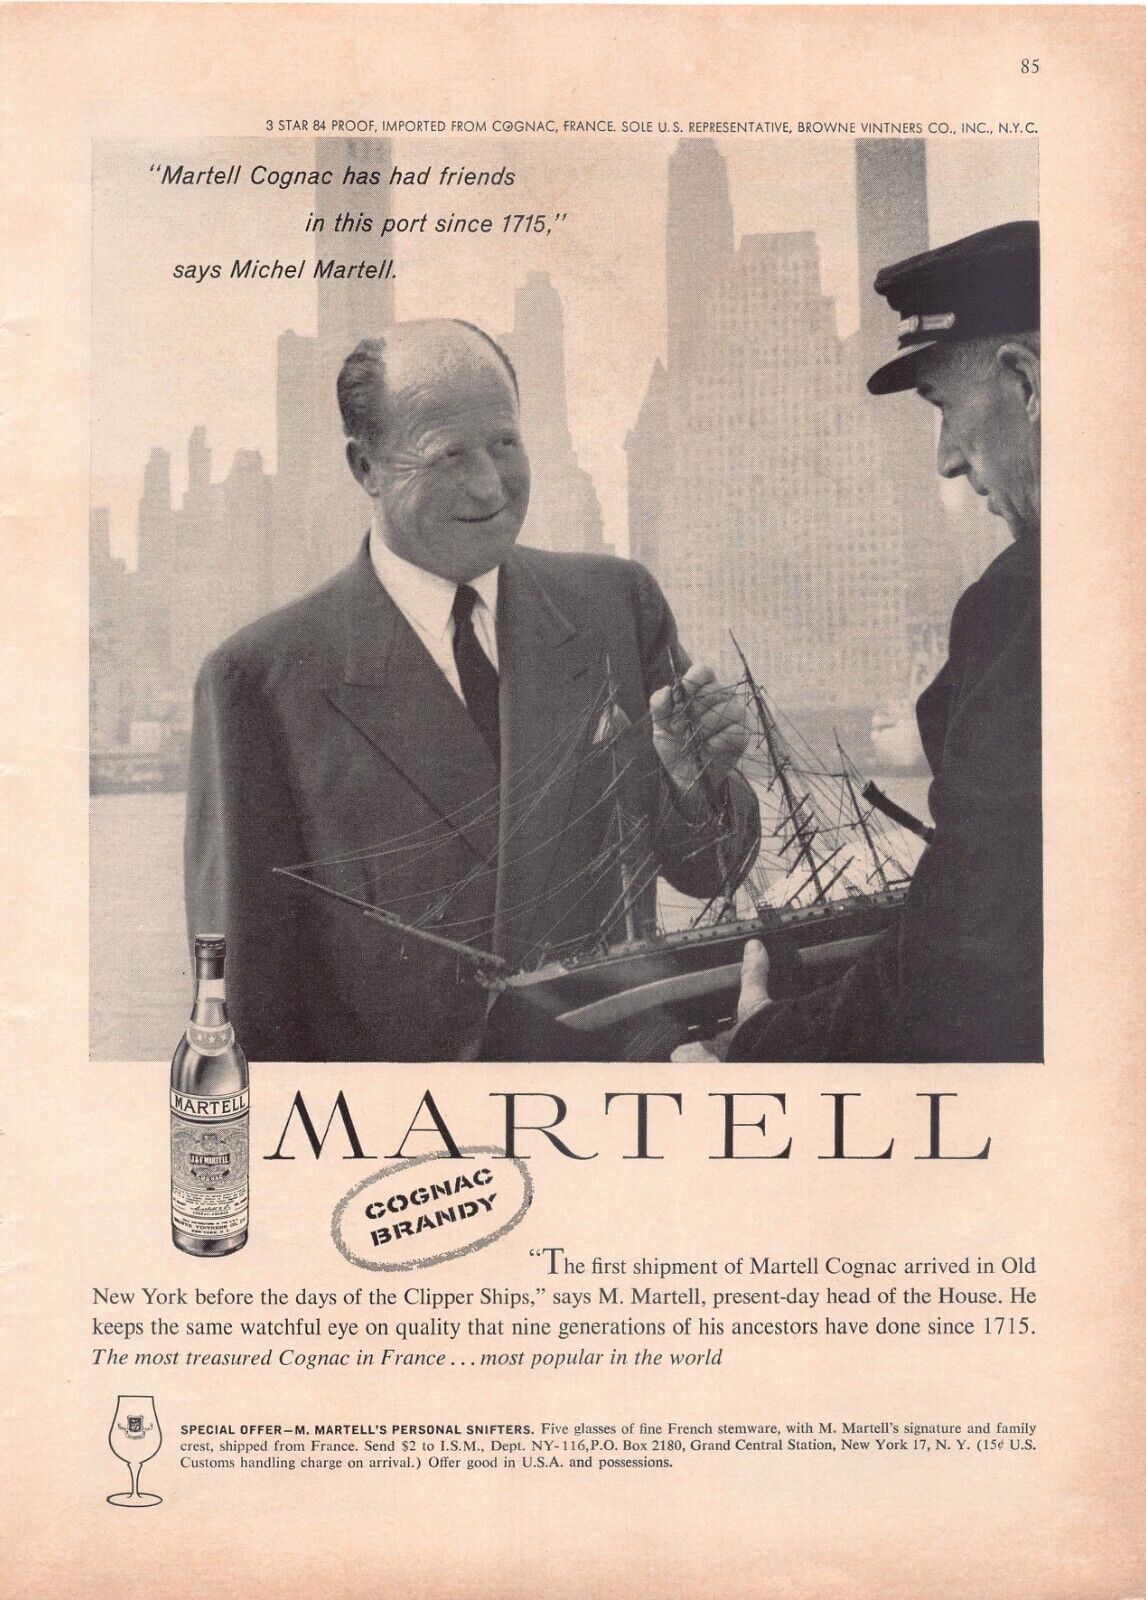 Michel Martell Cognac Brandy Vintage Magazine Print Ad